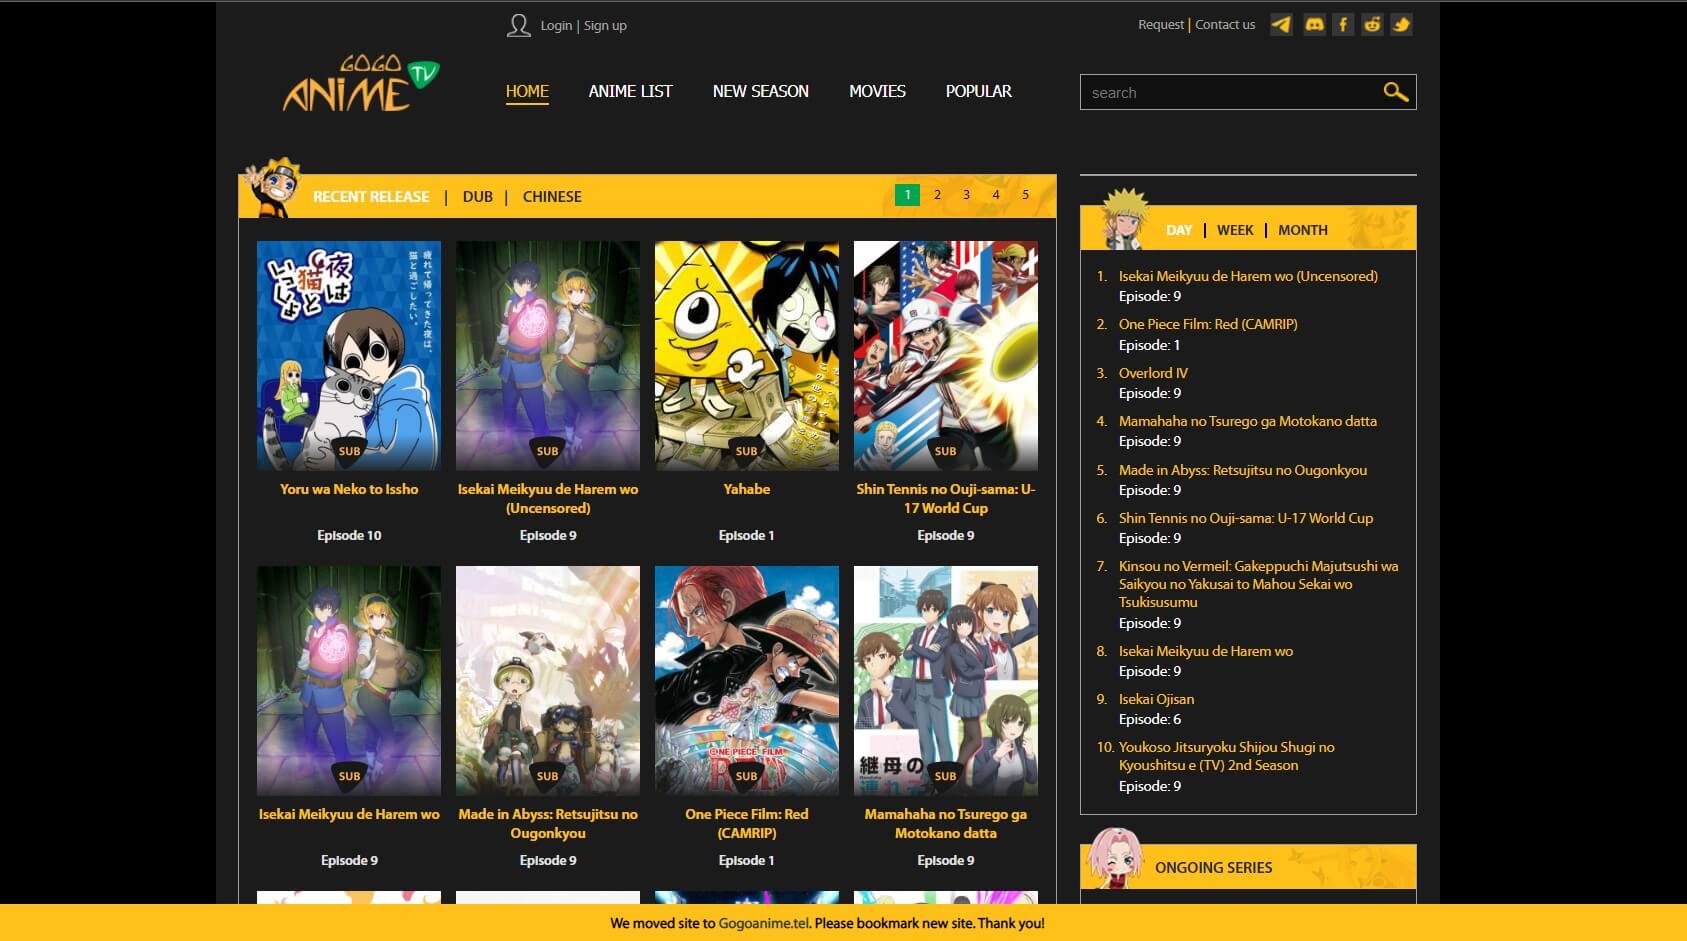 Gogoanime.tv is a Platform to watch Anime with English subtitles